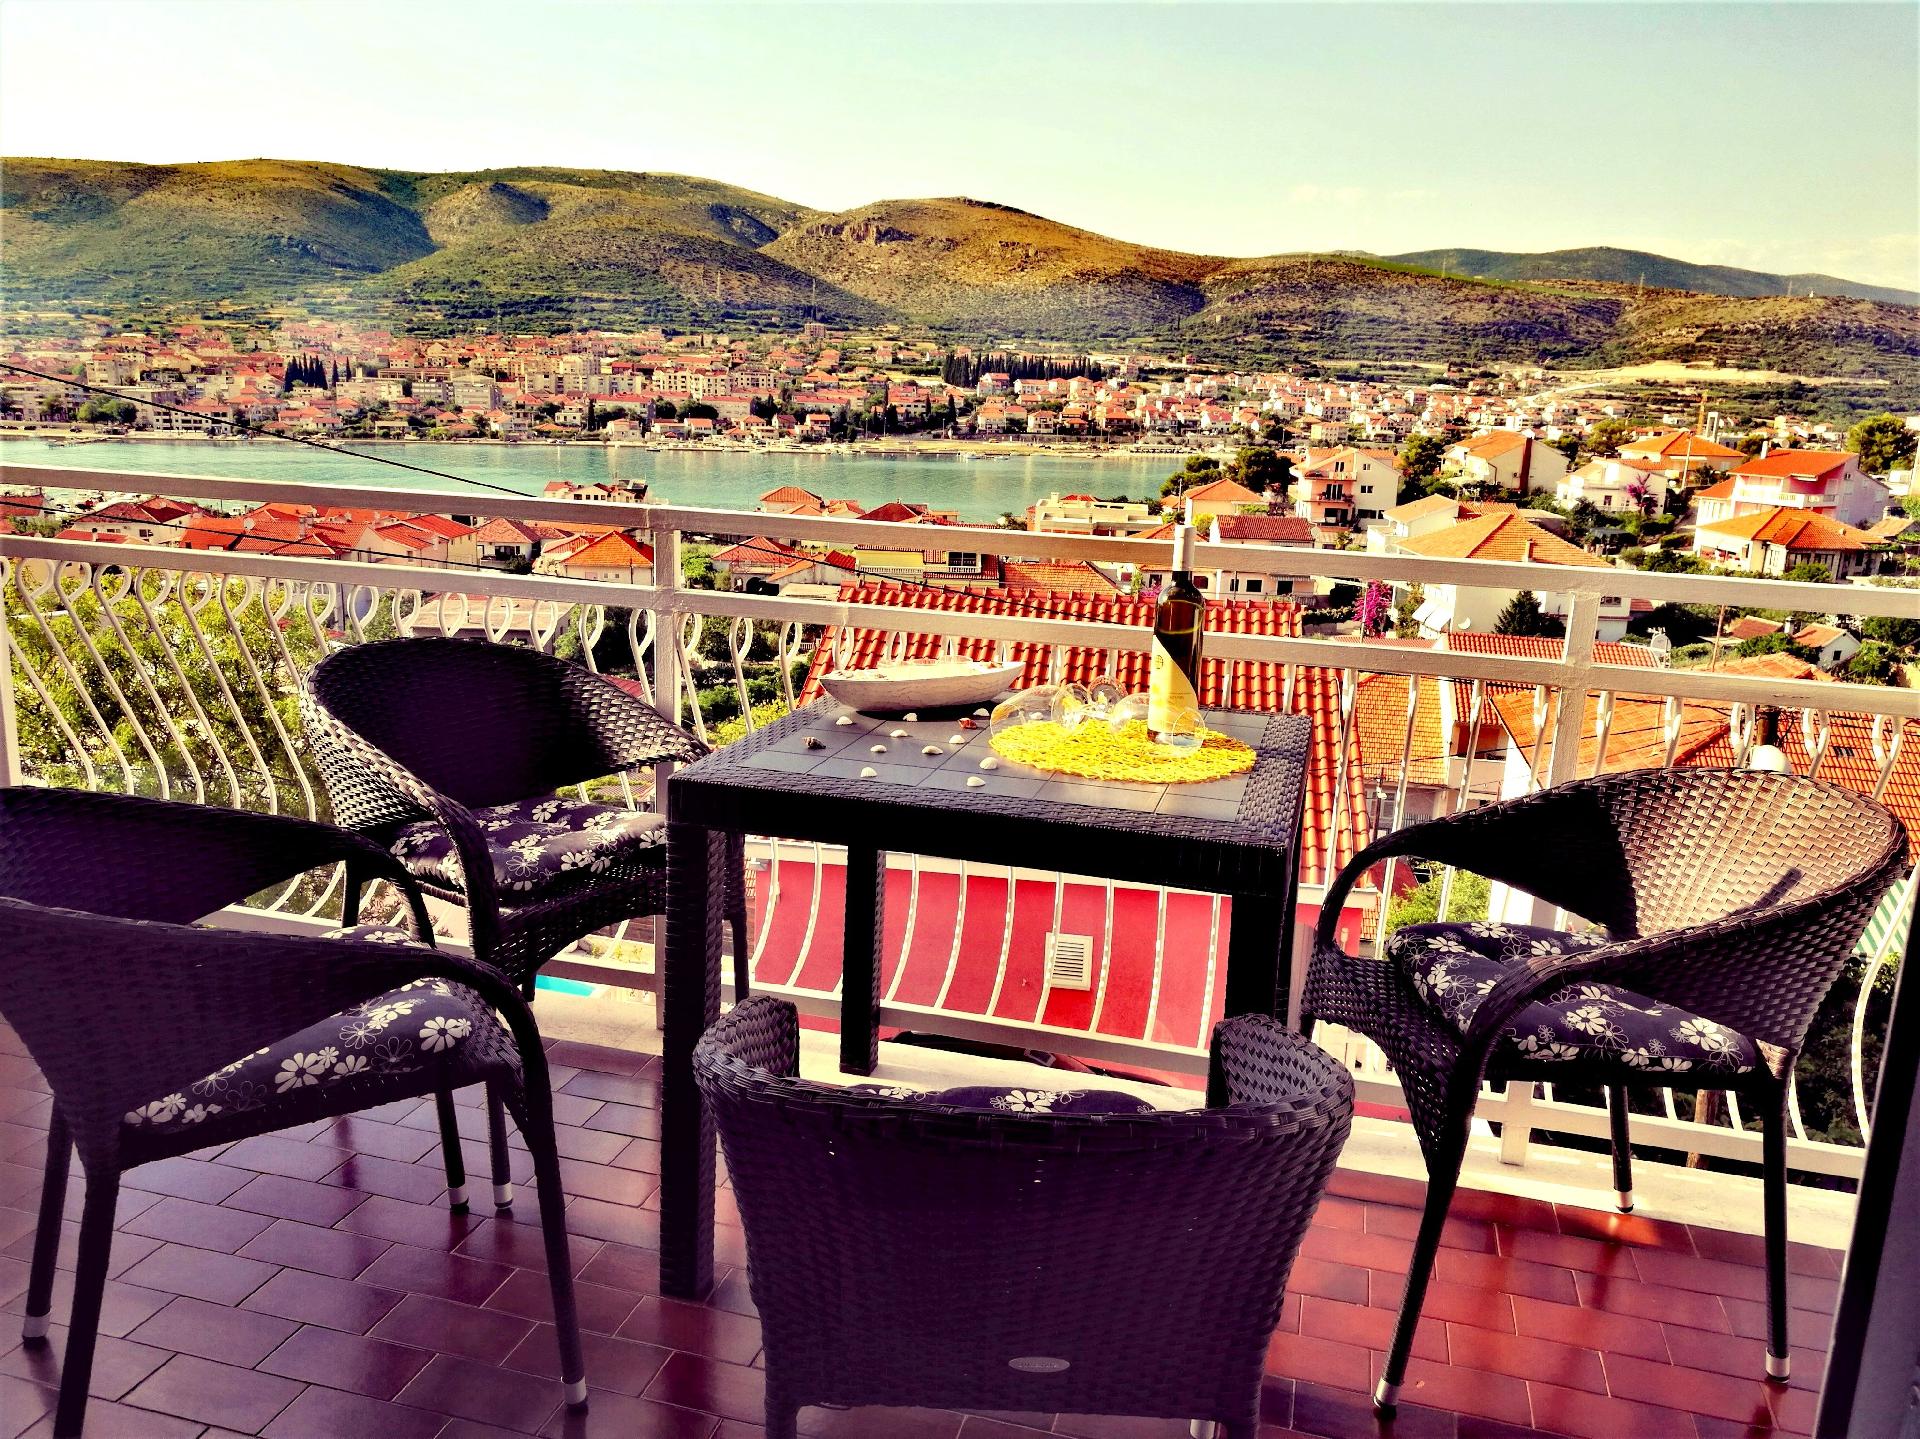 Ferienwohnung nahe der Altstadt mit Meerblick  in Dalmatien